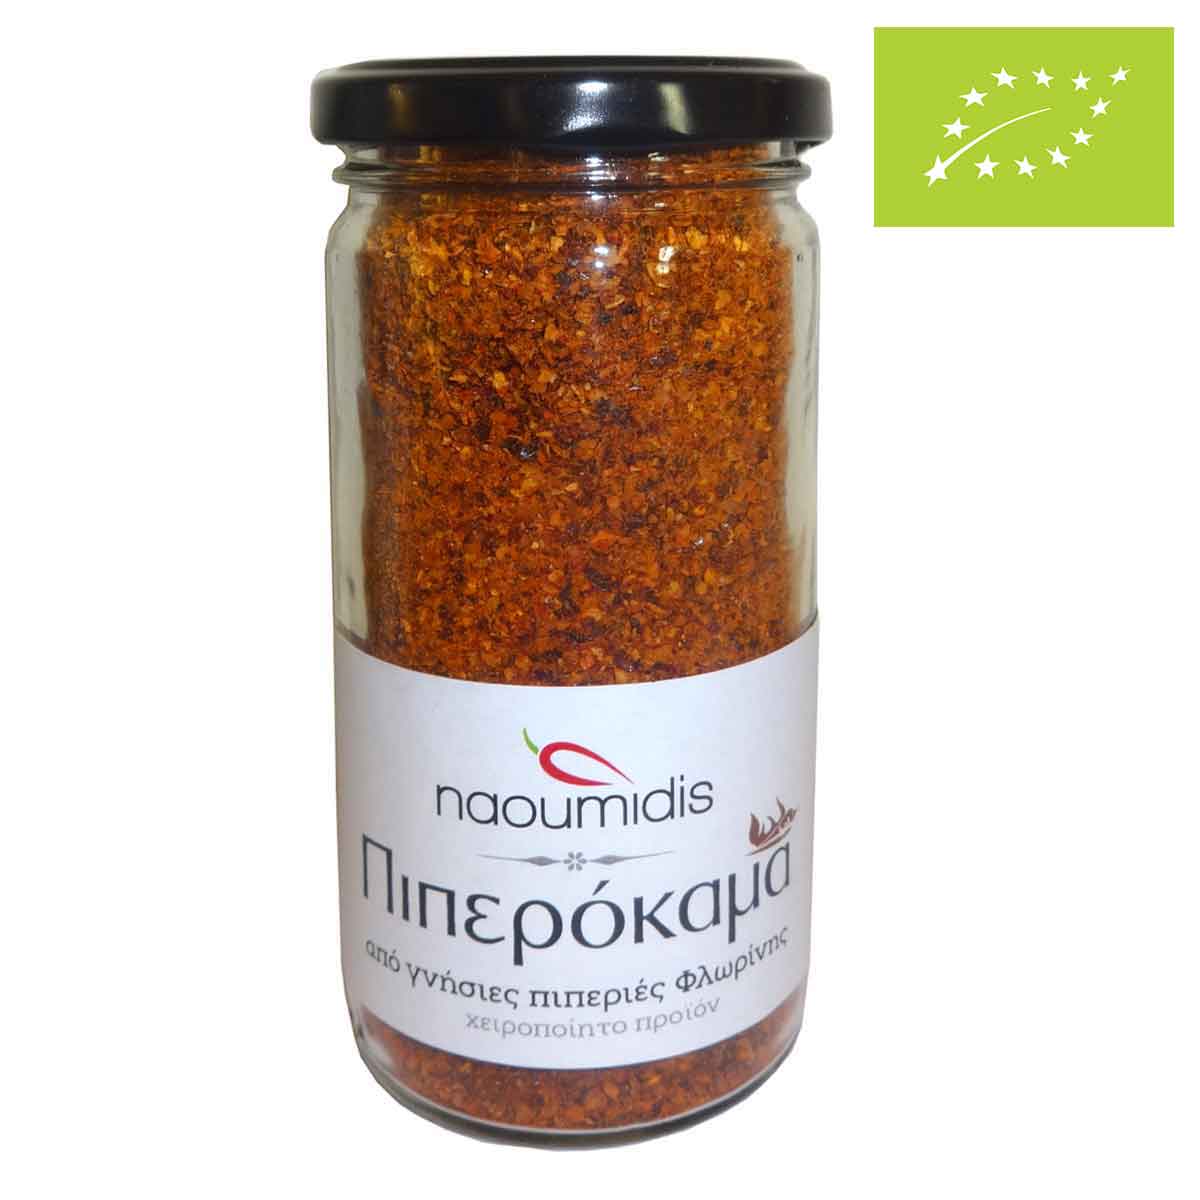 Bio Grinded Sundried Hot Pepper, "Piperokama Naoumidis", 130gr, no preservatives